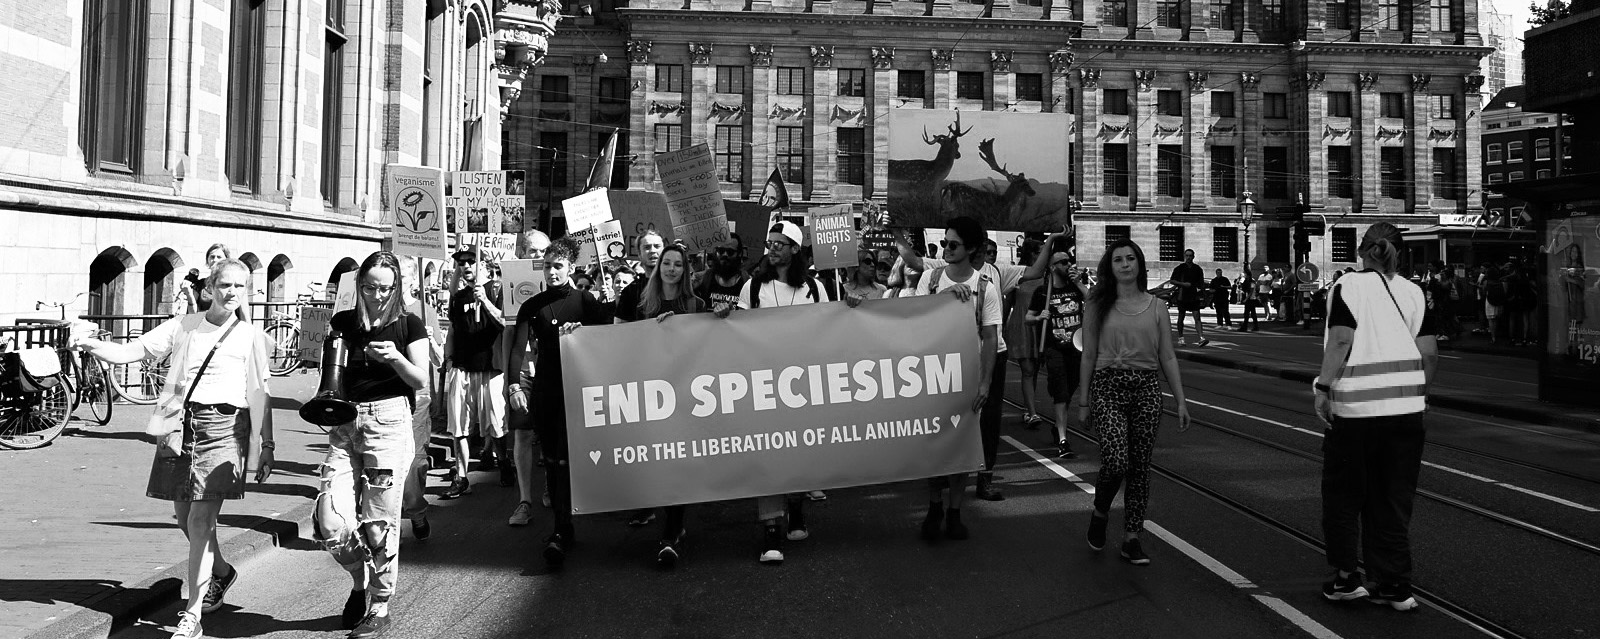 End speciesism Animal Rights March 2018 - Brenda de Groot